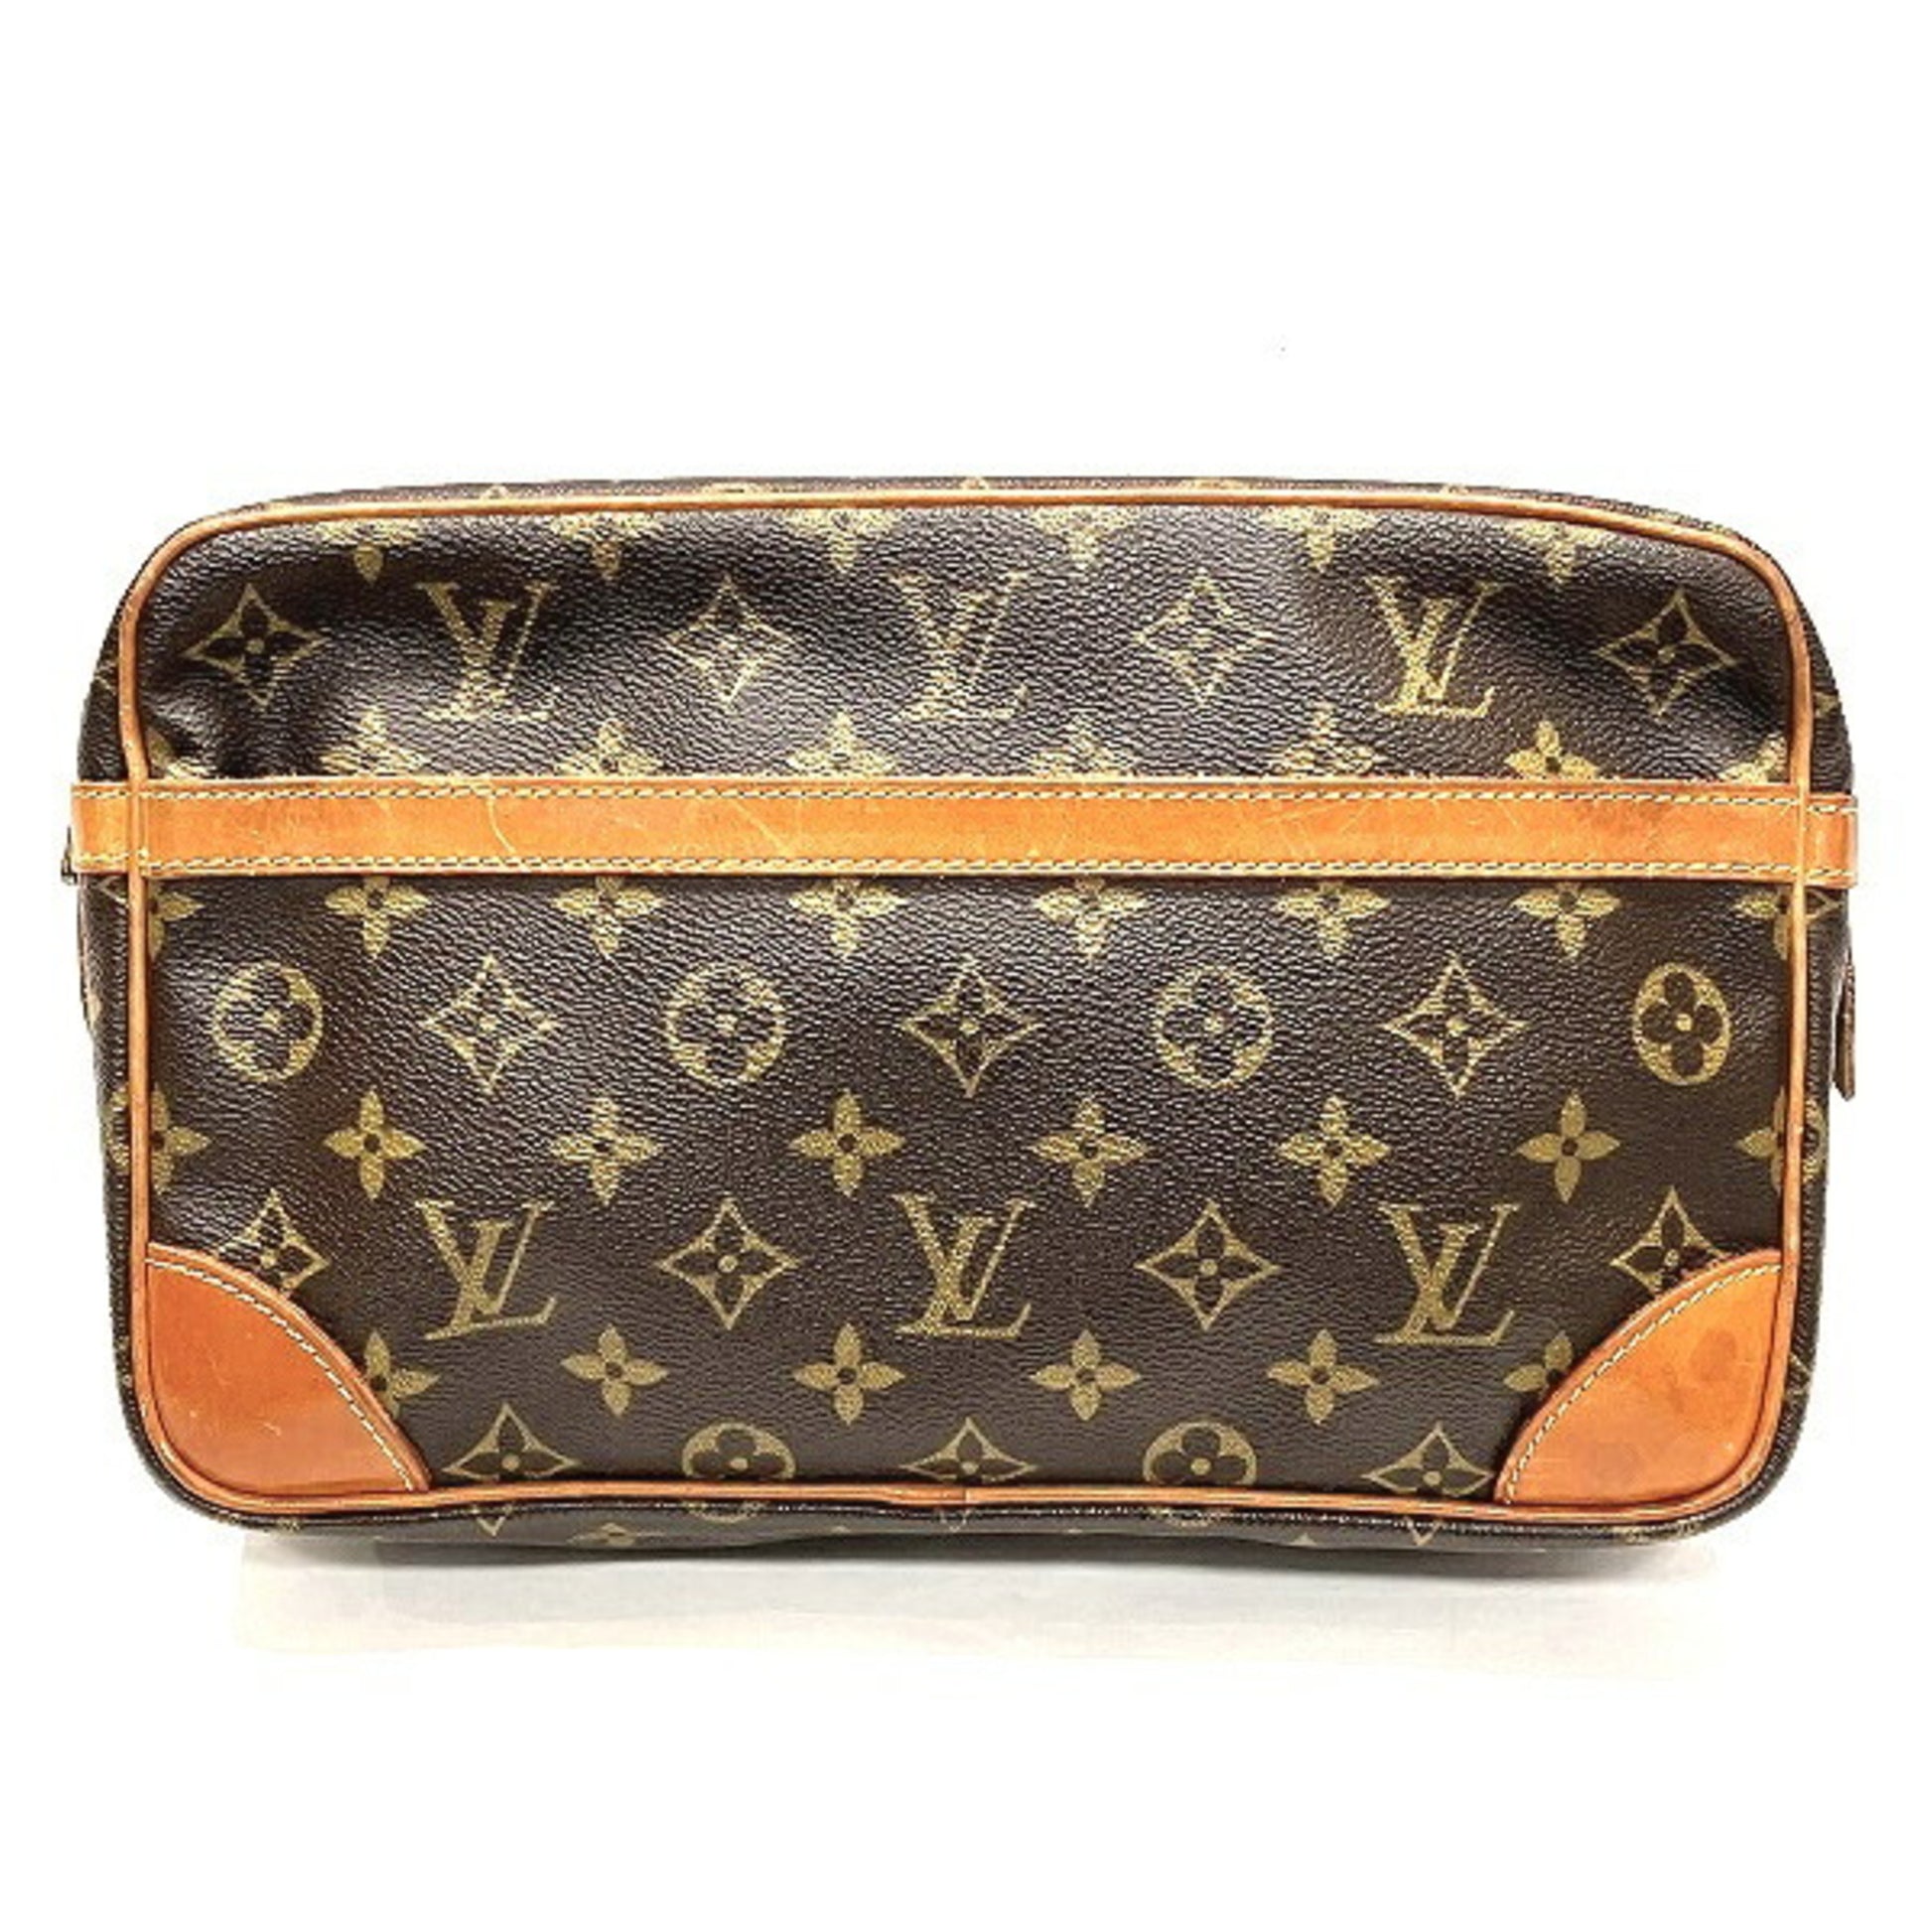 Louis Vuitton Compiegne 28 Tan - $550 - From Fancy